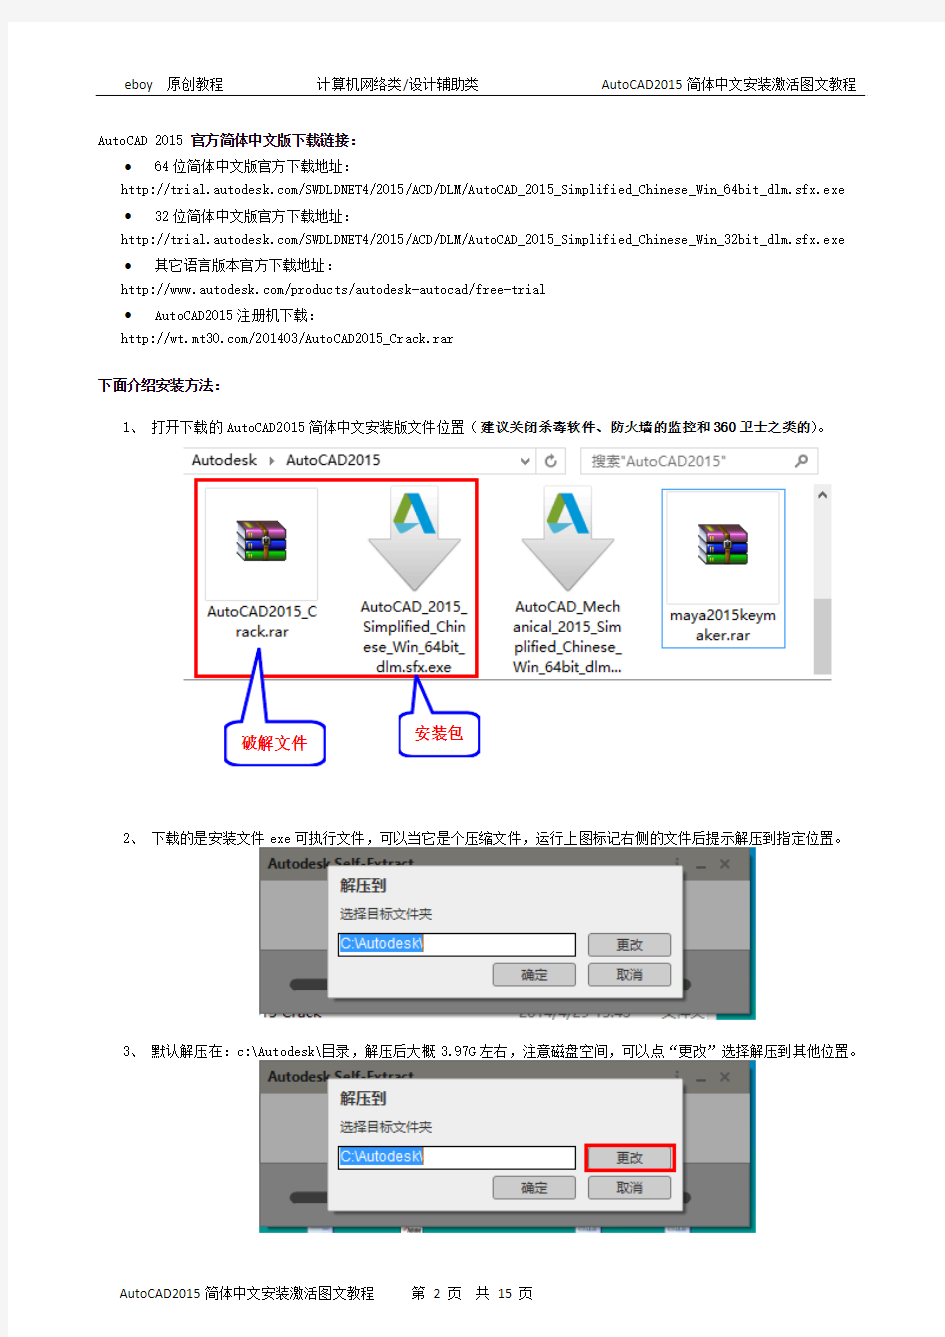 AutoCAD 2015 简体中文版安装、激活图文教程